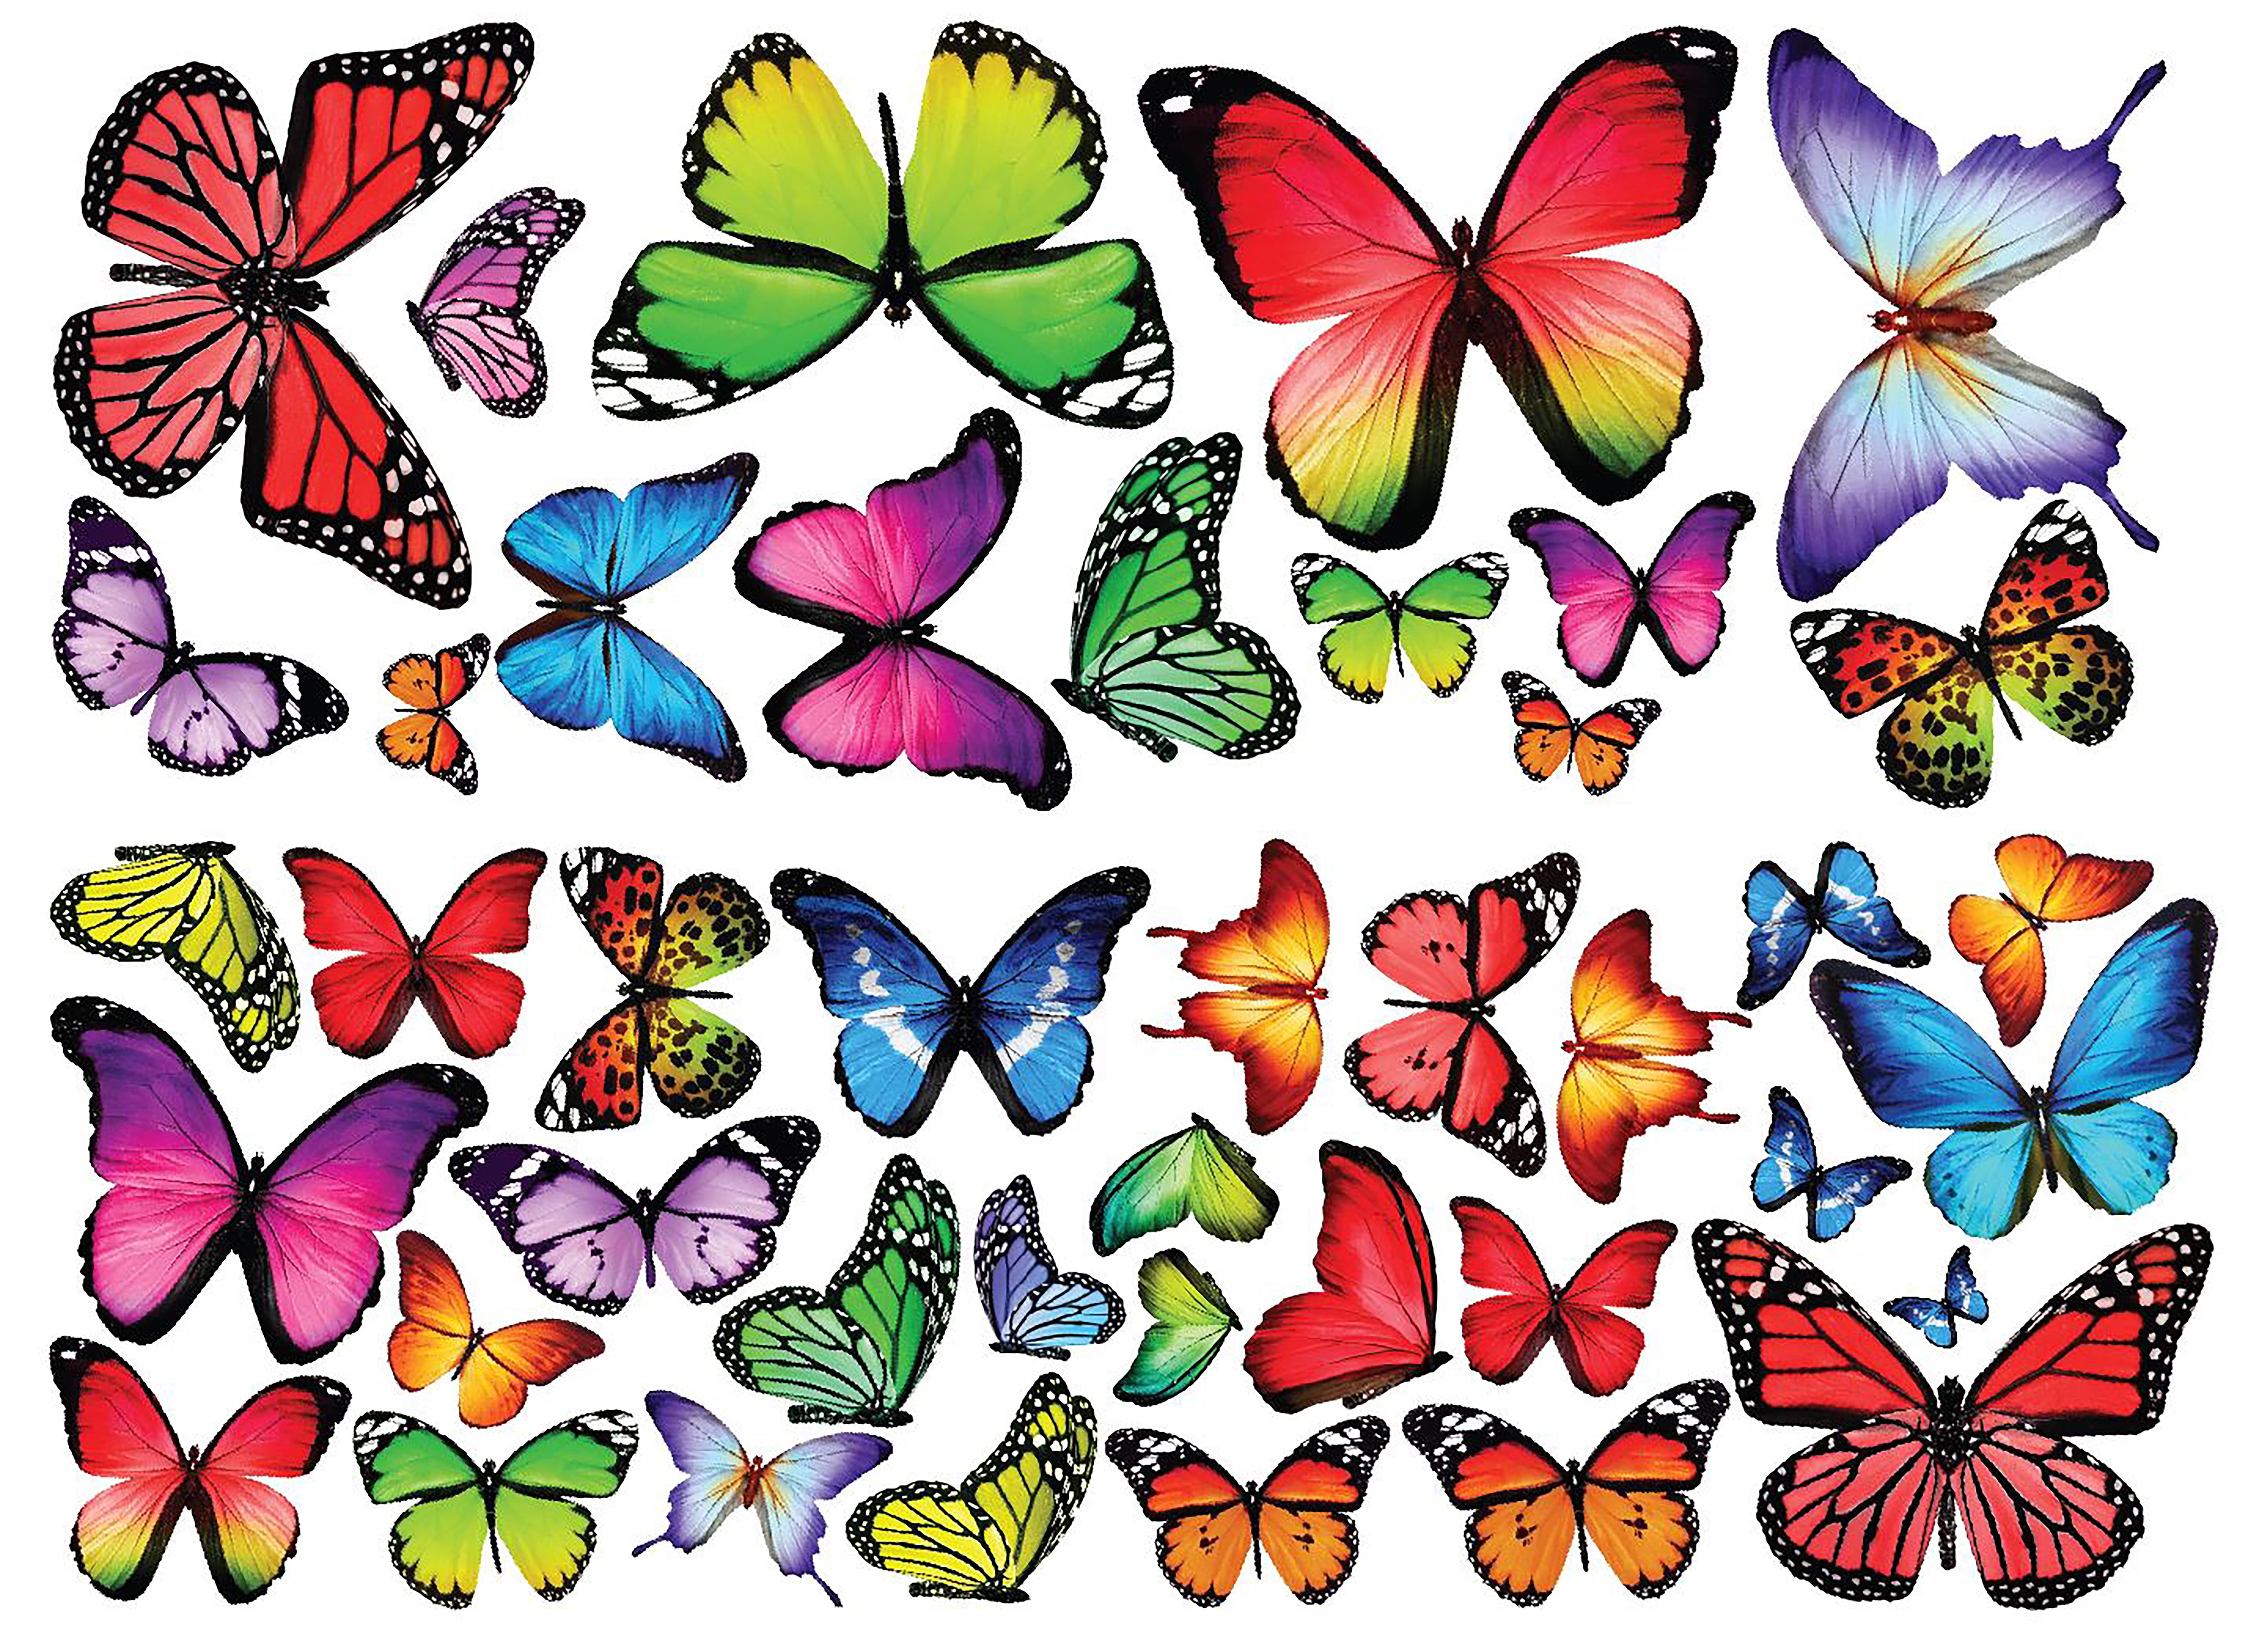 Maroon Butterfly Wall Decals, Nursery Stickers